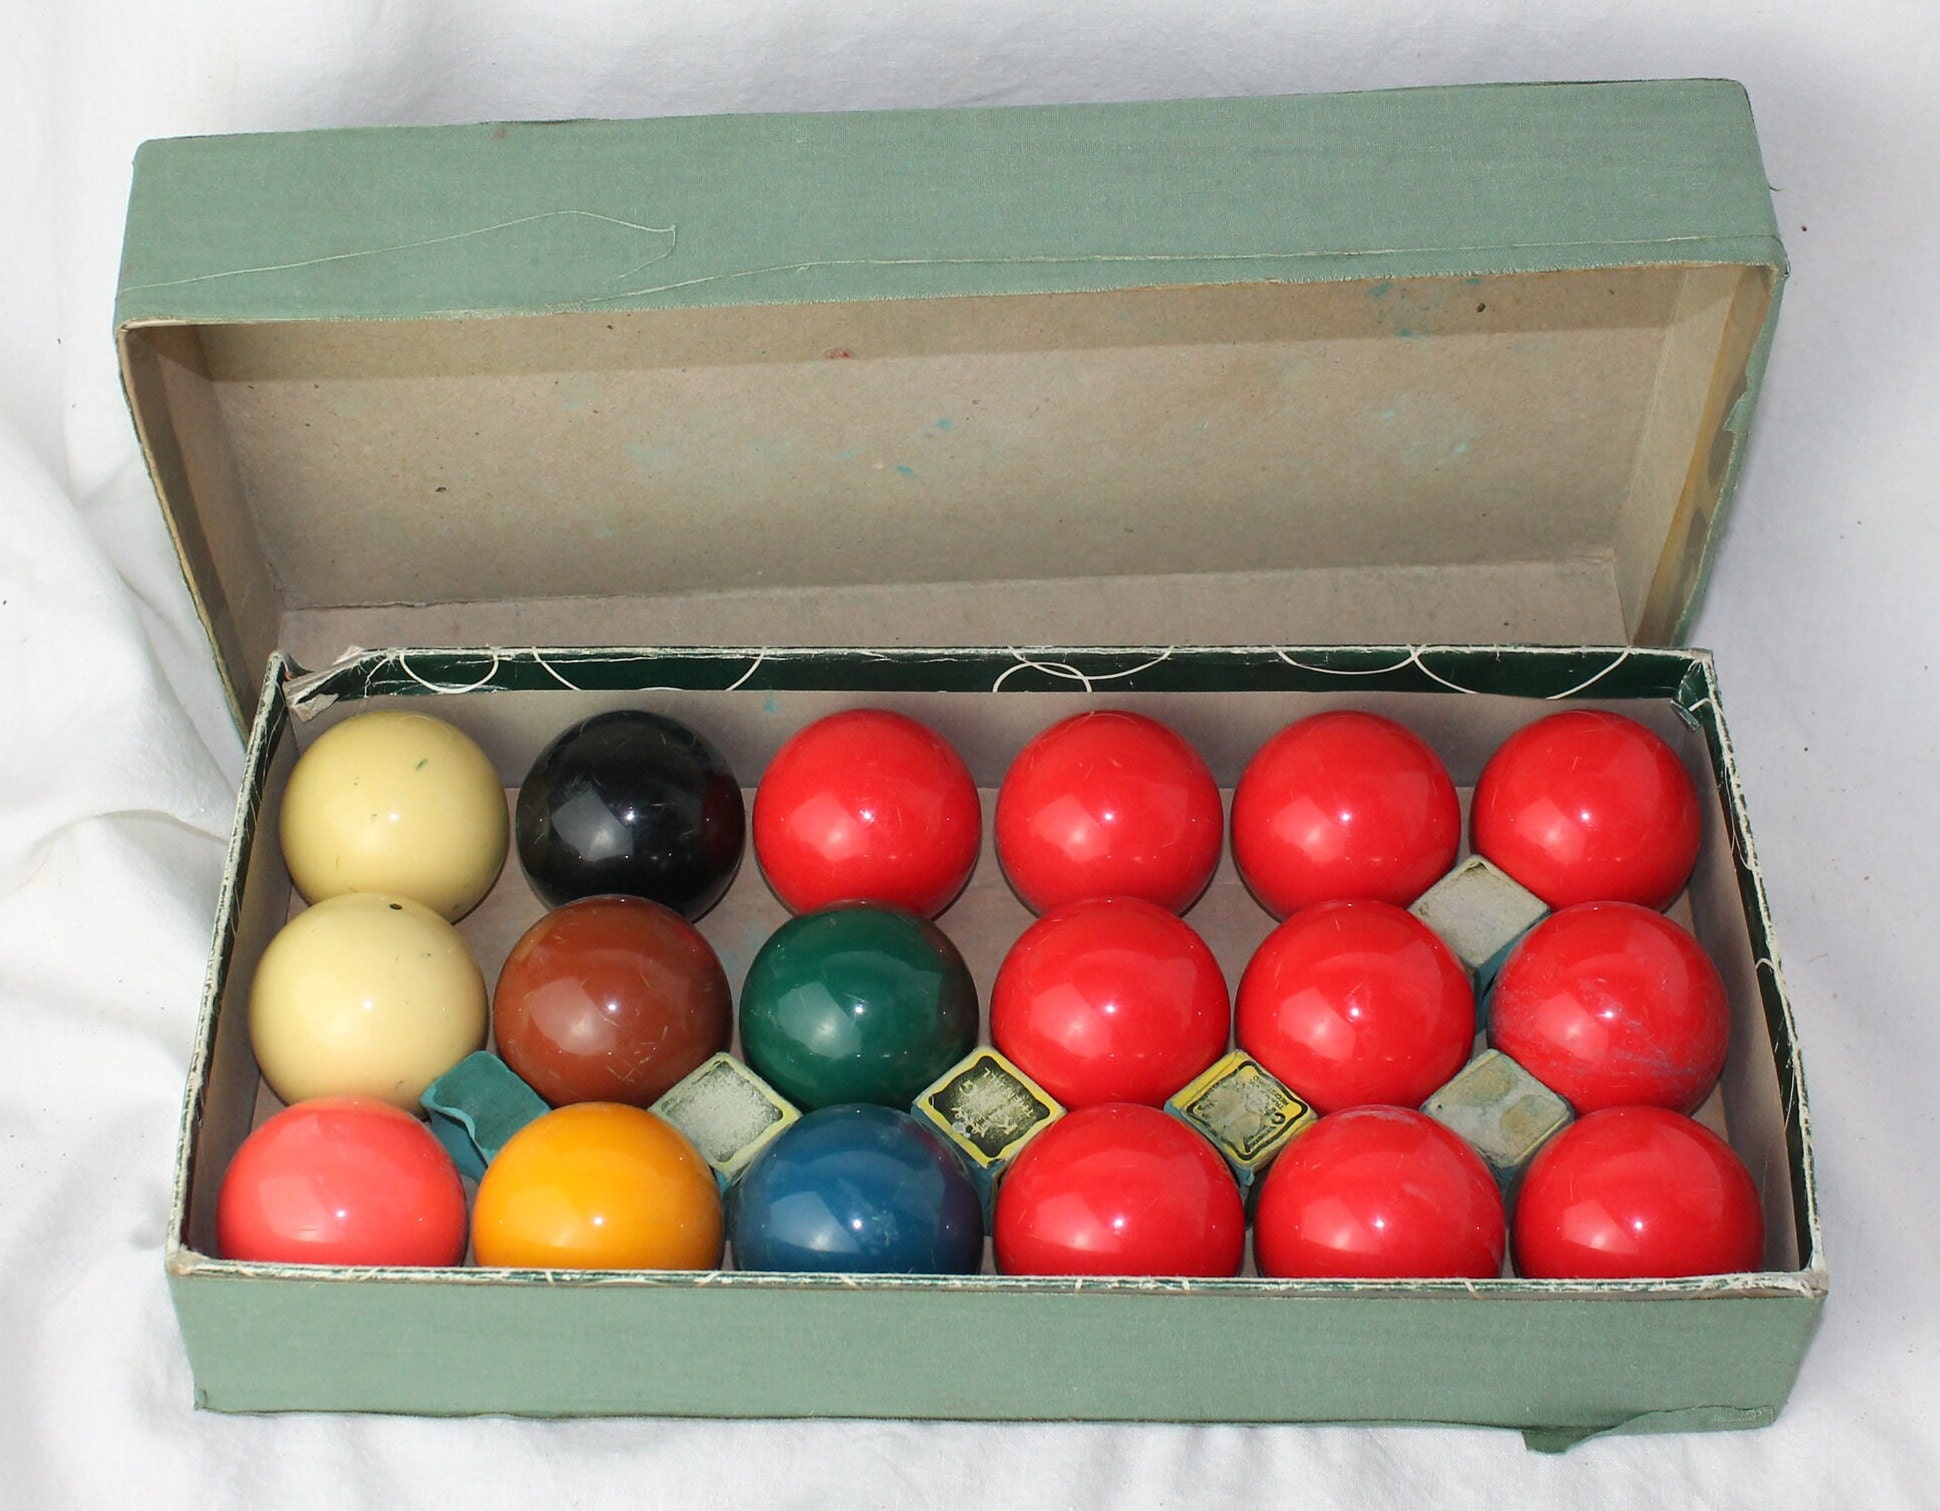 18 Ball Snooker or Billiard Ball Game Set Vintage Traditional